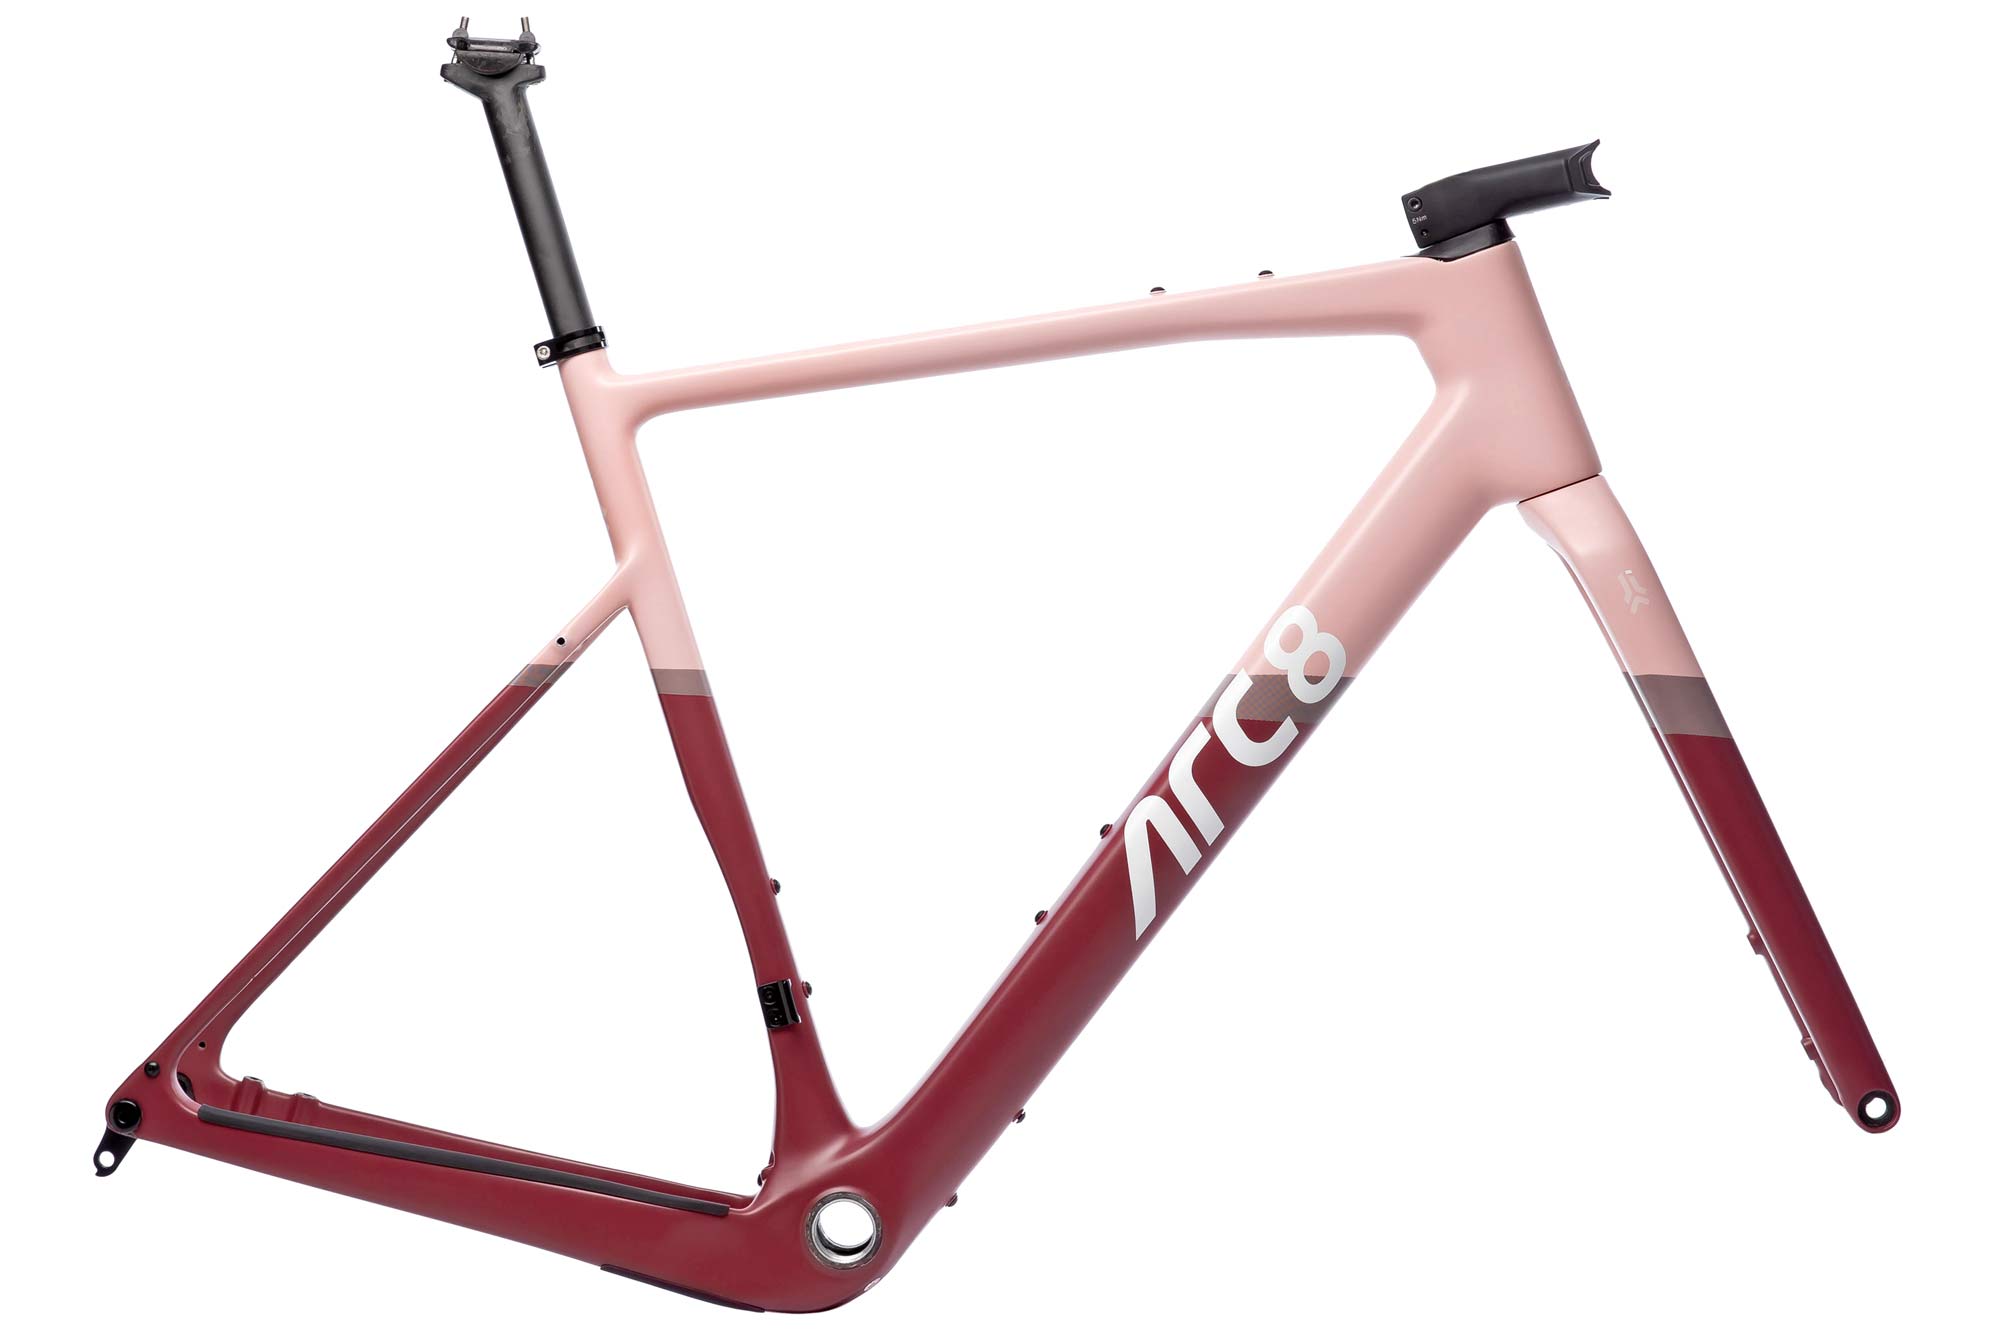 Arc8 Eero gravel bike, lightweight aero carbon fast gravel road bike, pink frameset